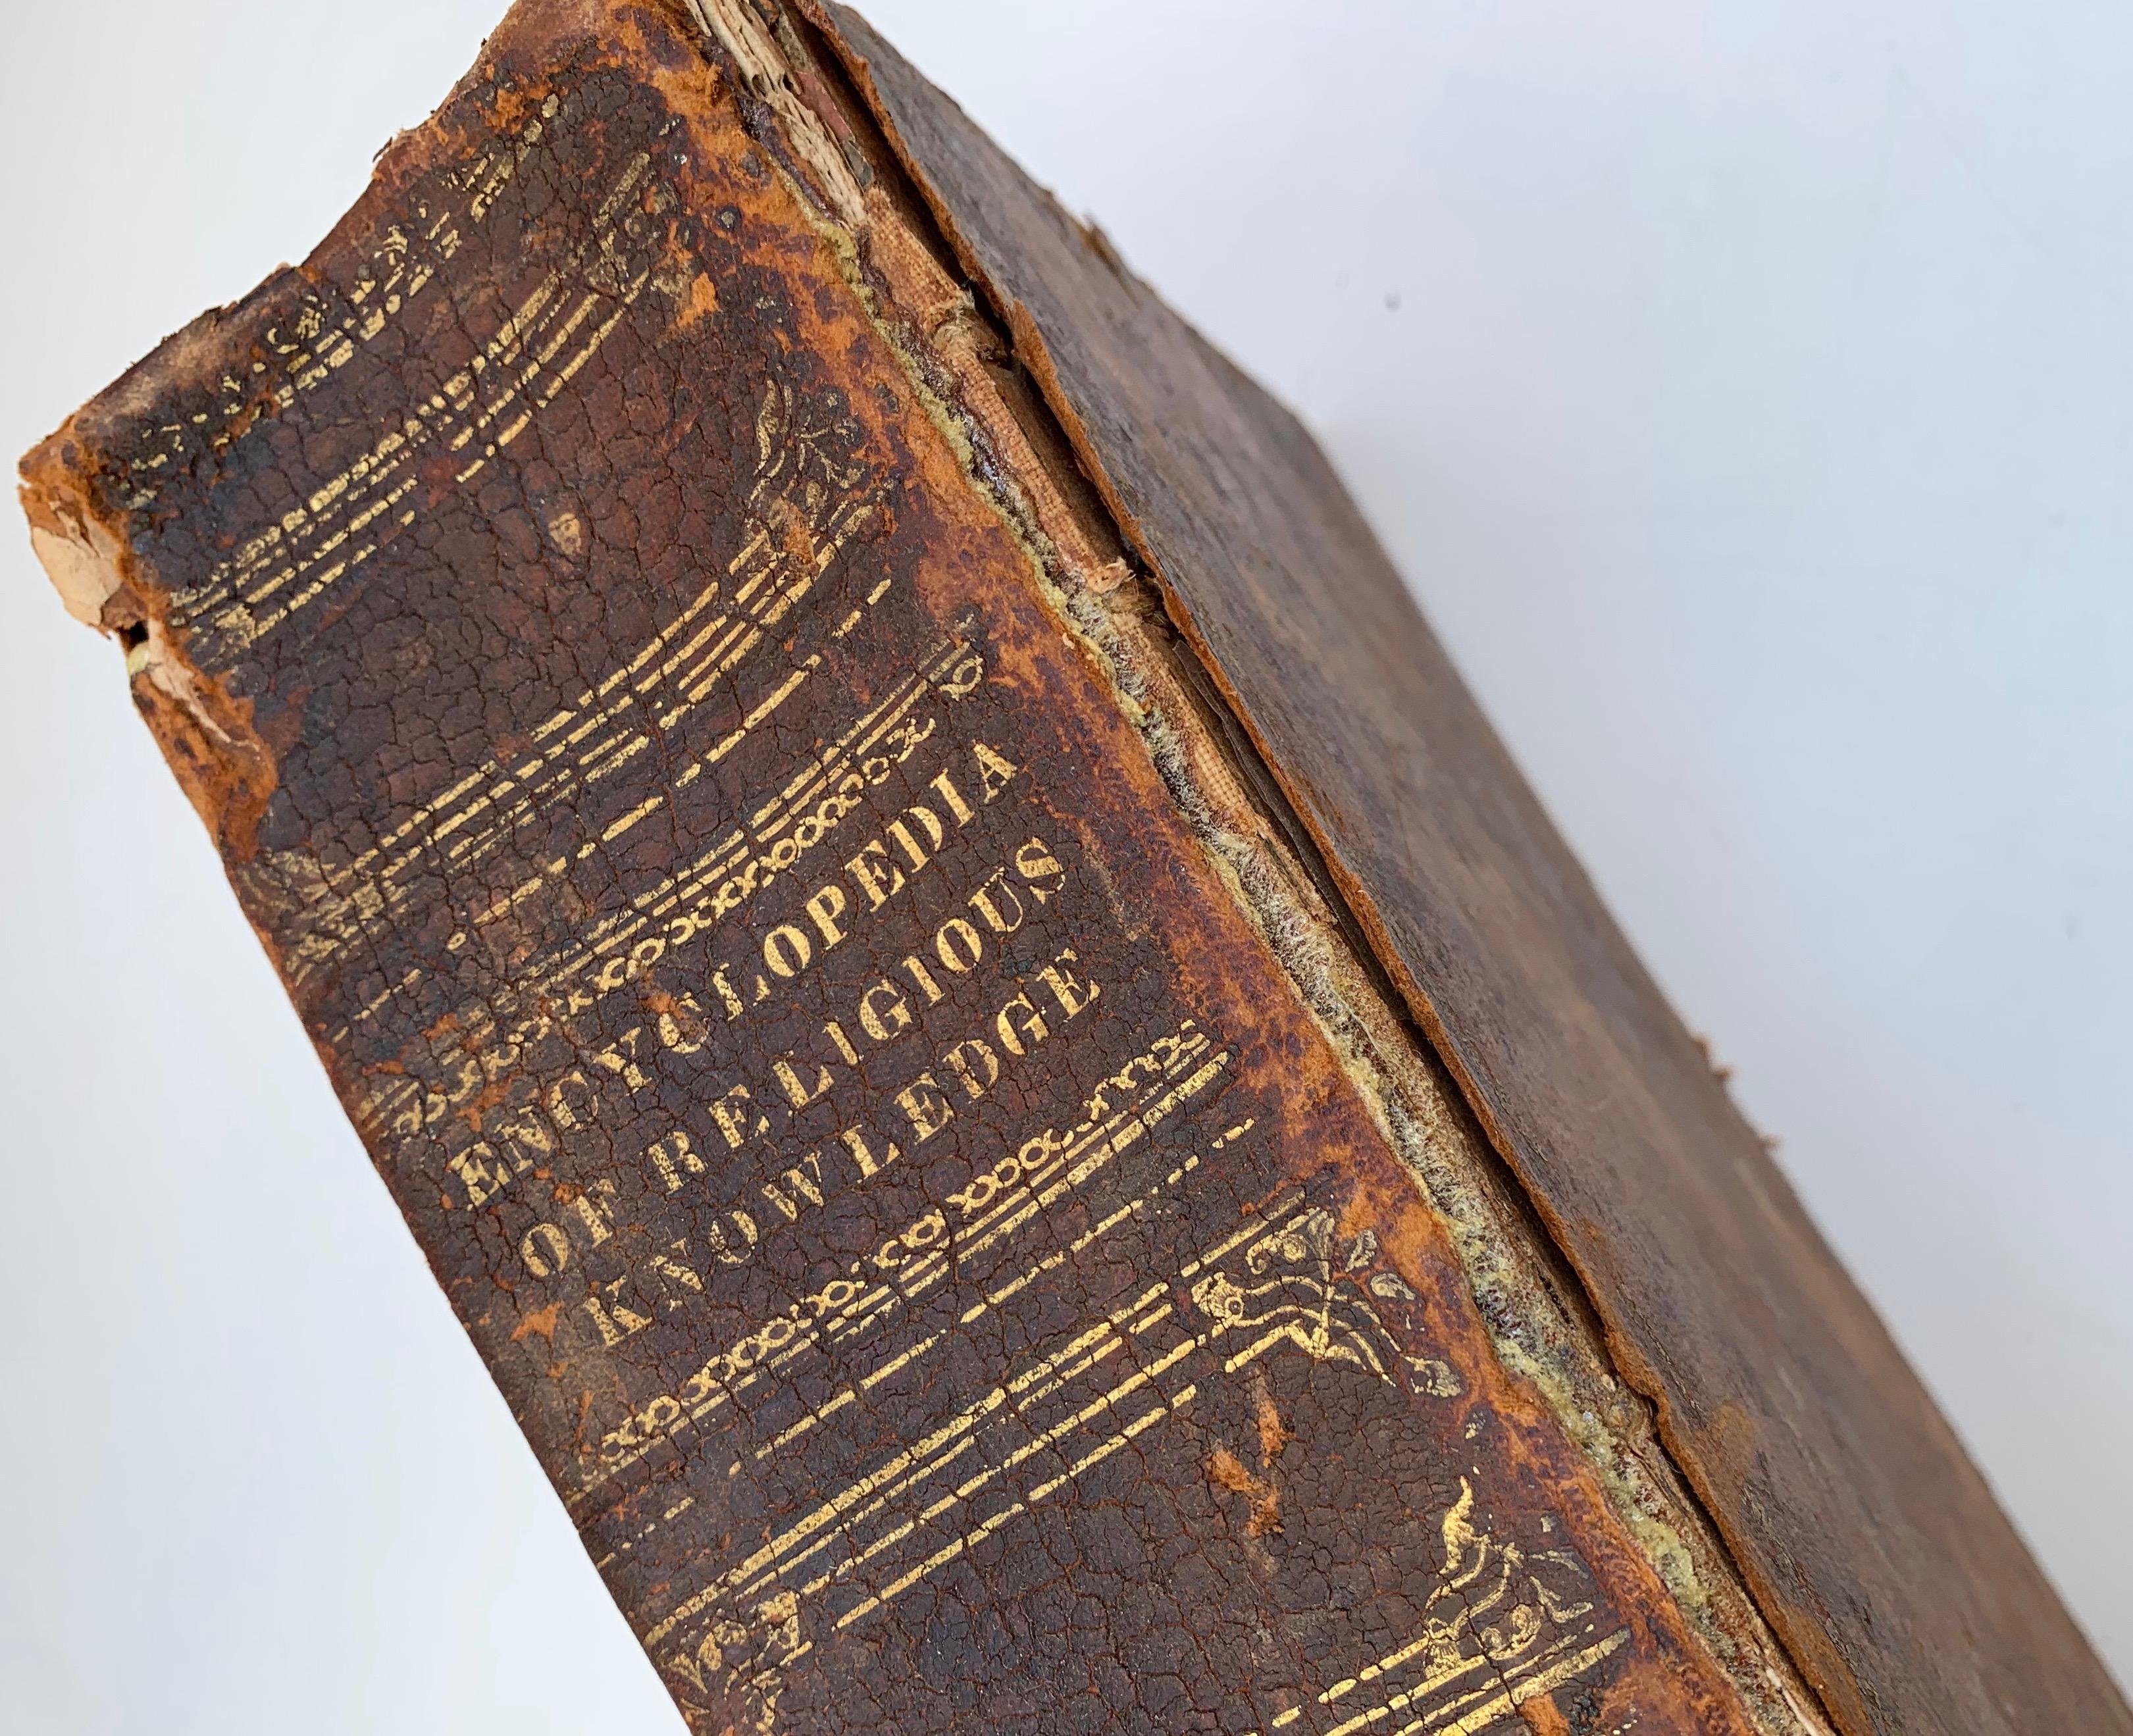 Fessenden & Co.'s Encyclopedia of Religious Knowledge (1835)